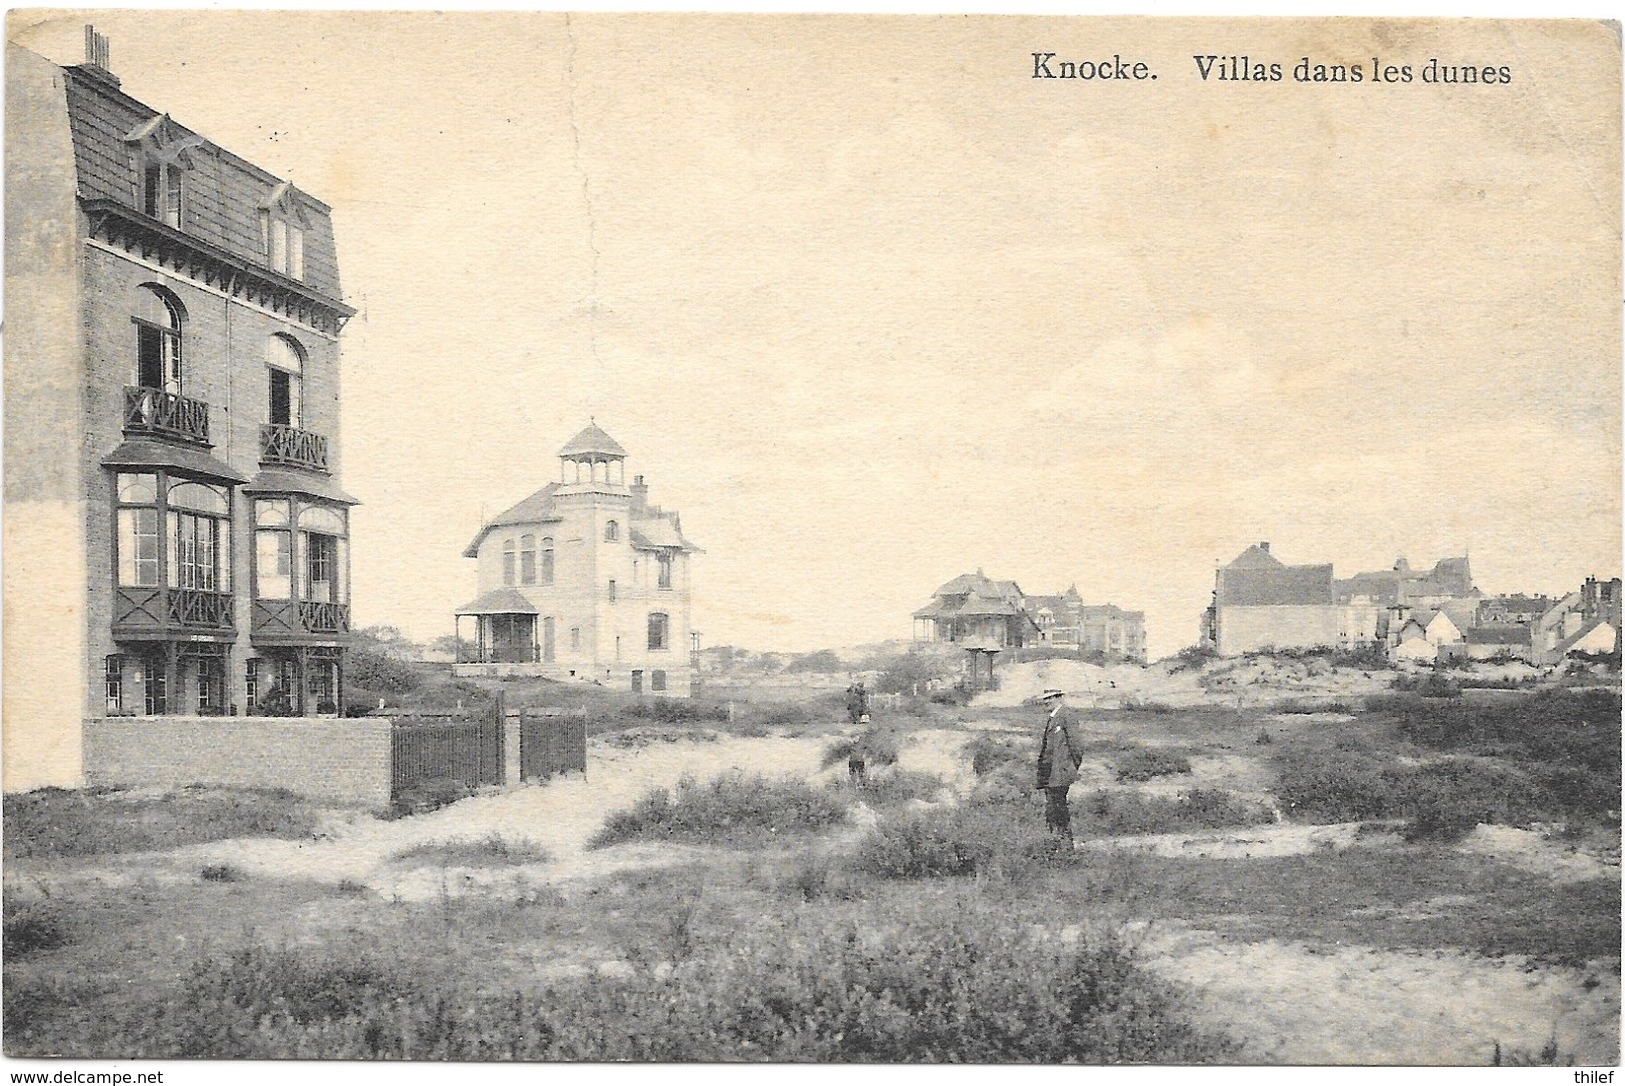 Knocke NA83: Villas Dans Les Dunes 1911 - Knokke